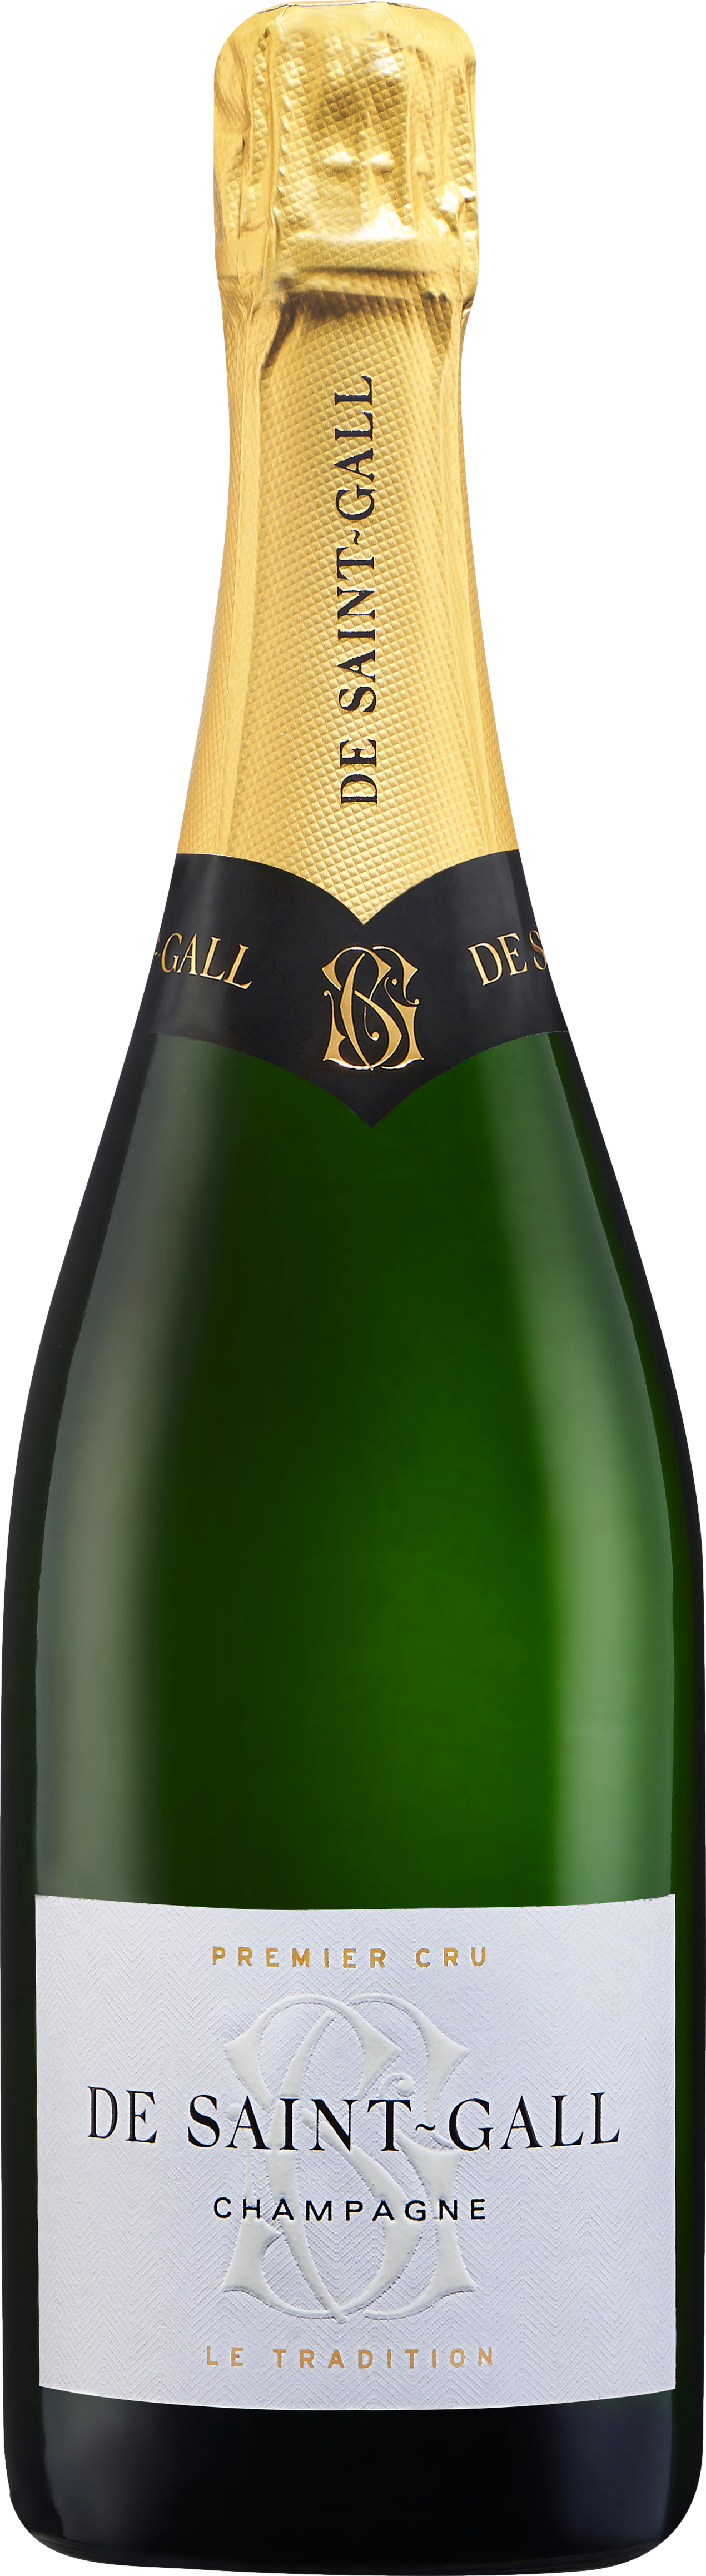 Champagne De Saint Gall Tradition Premier Cru